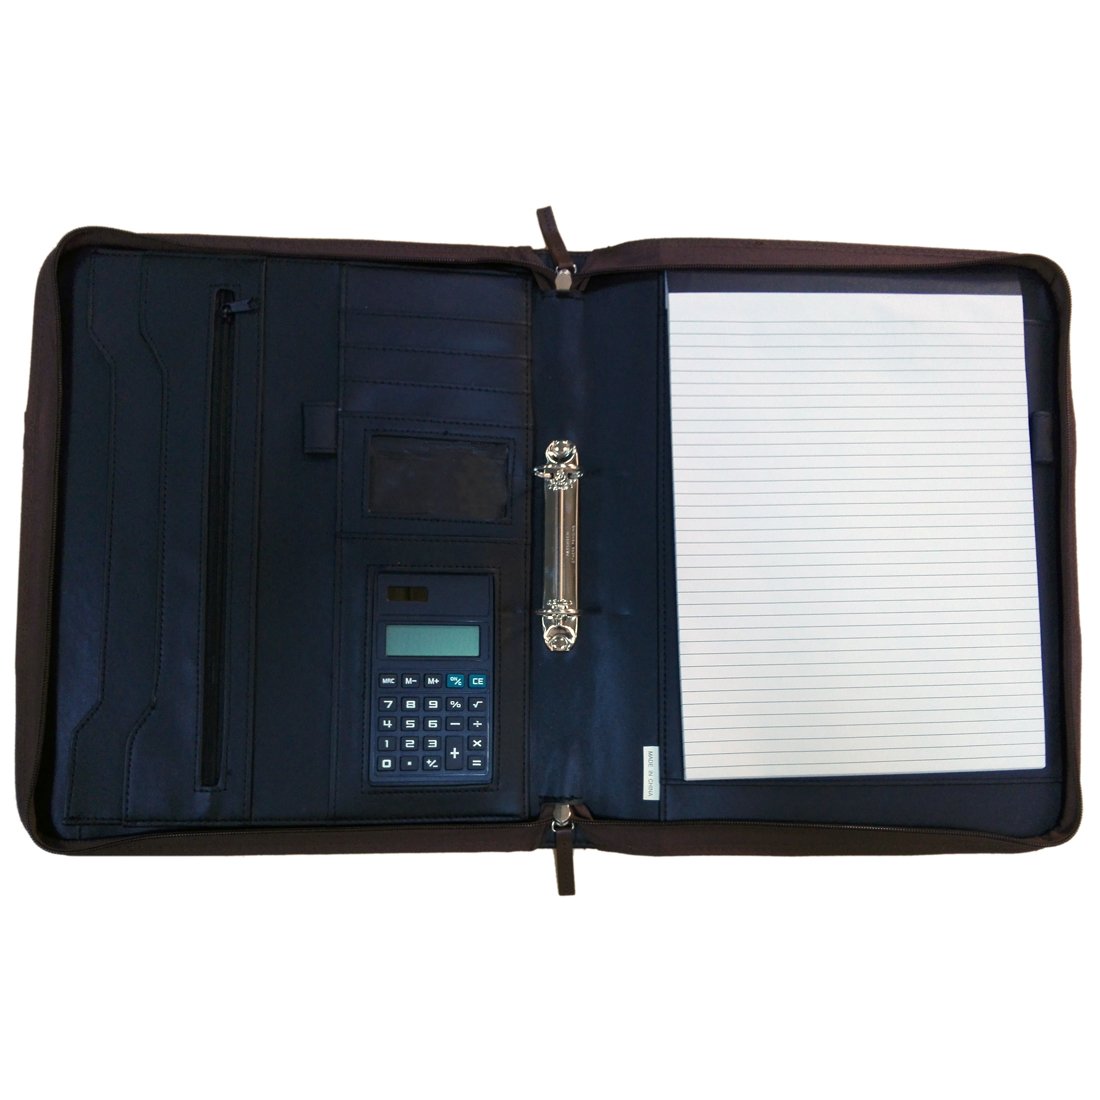 SAB Protofolio With Zipper and Book + Calculator Black 